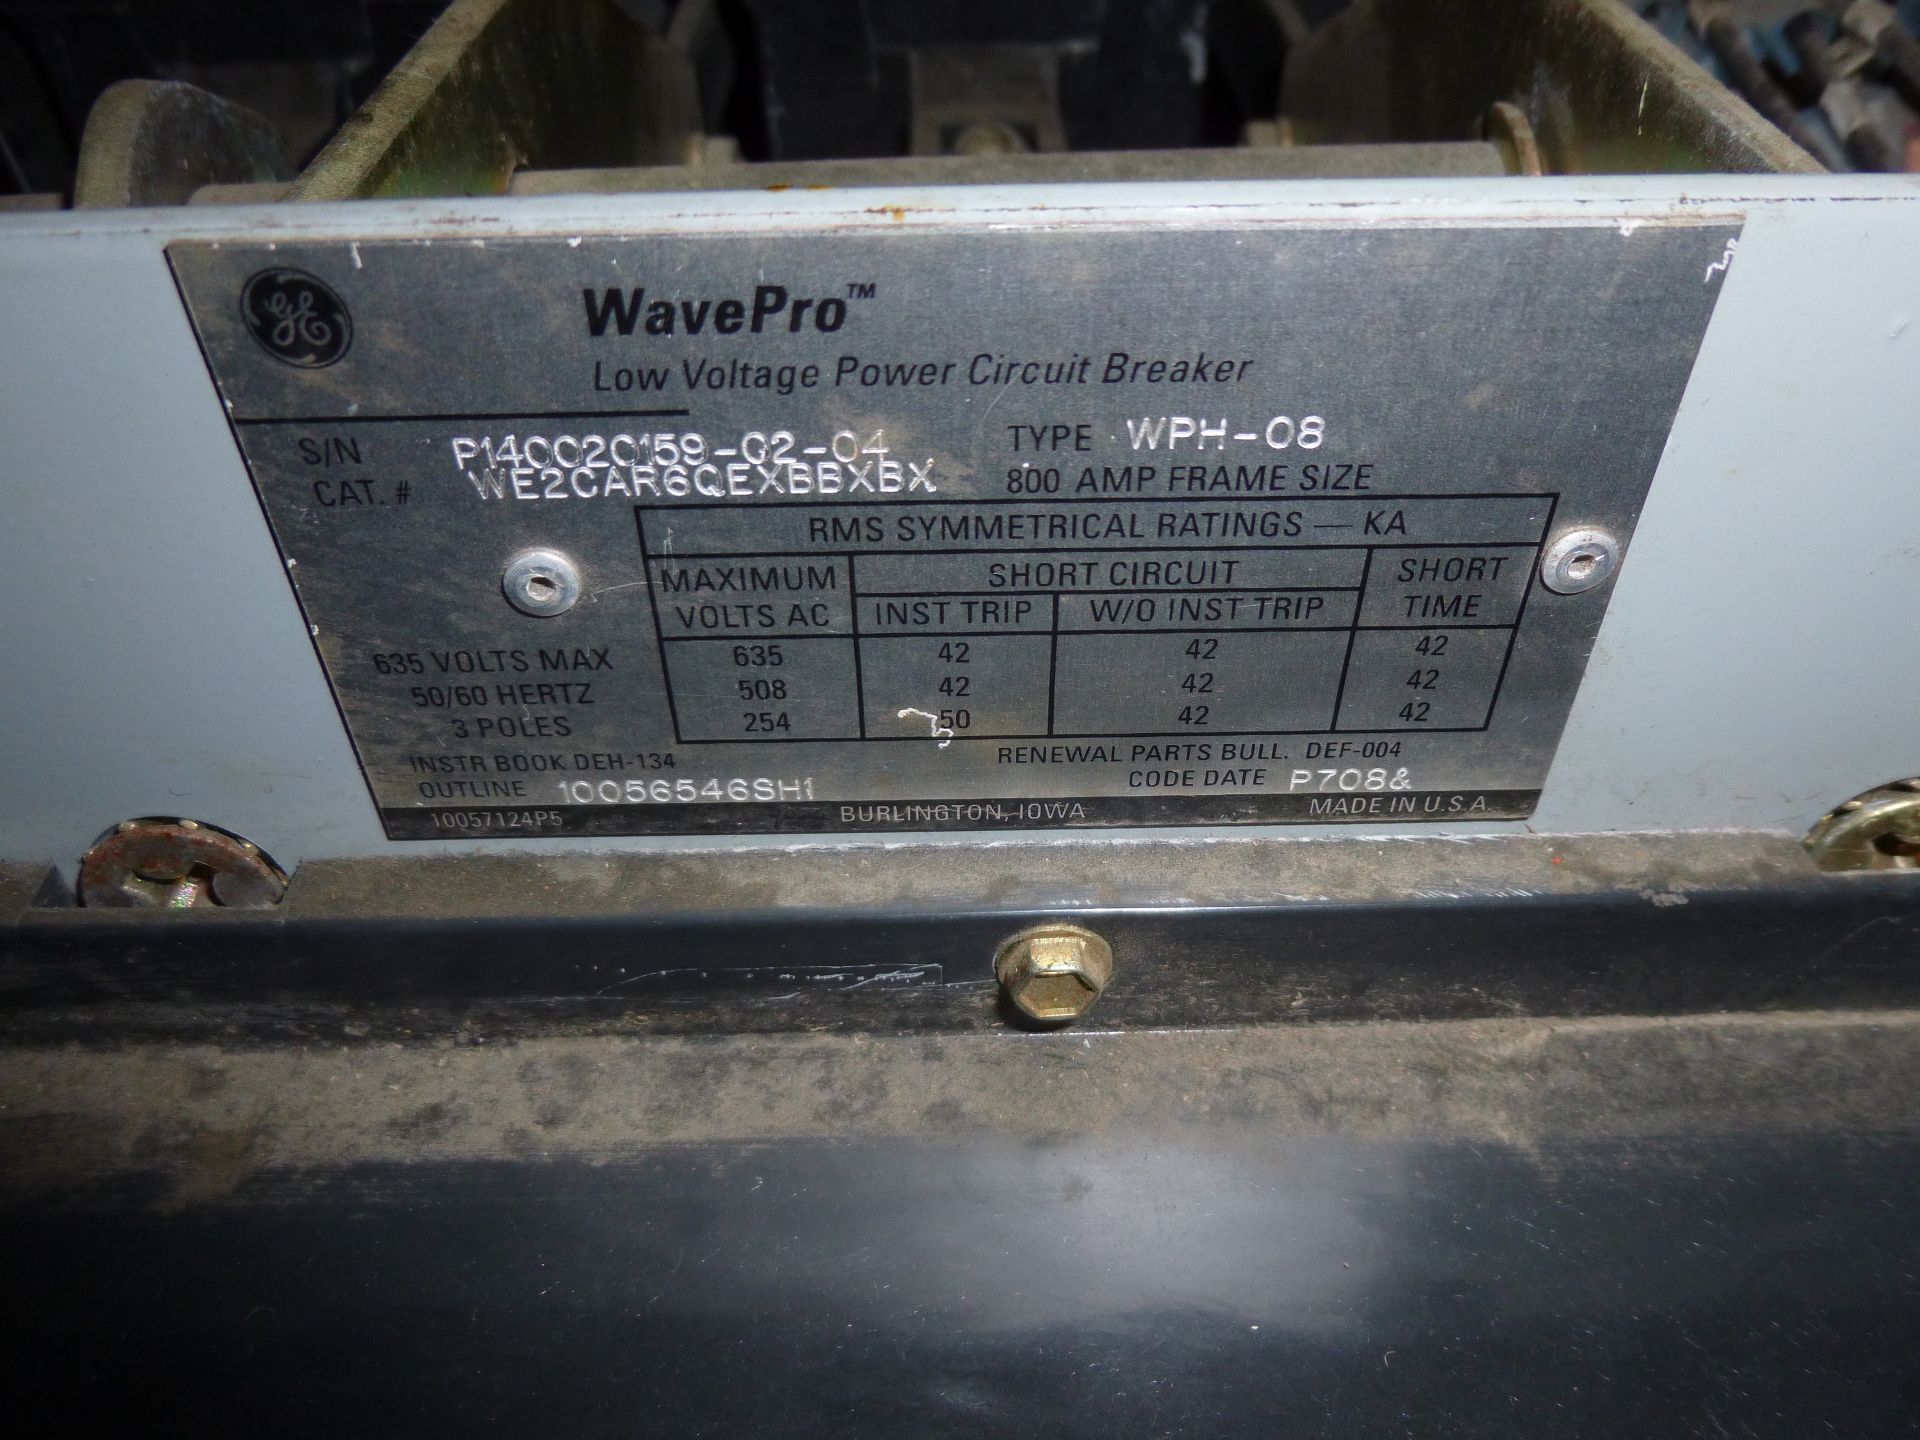 GE Wavepro low voltage Power circuit breaker Type WPH-08, Cat# WE2CAR6QEXBBXBX, 800amp frame size, - Image 3 of 3